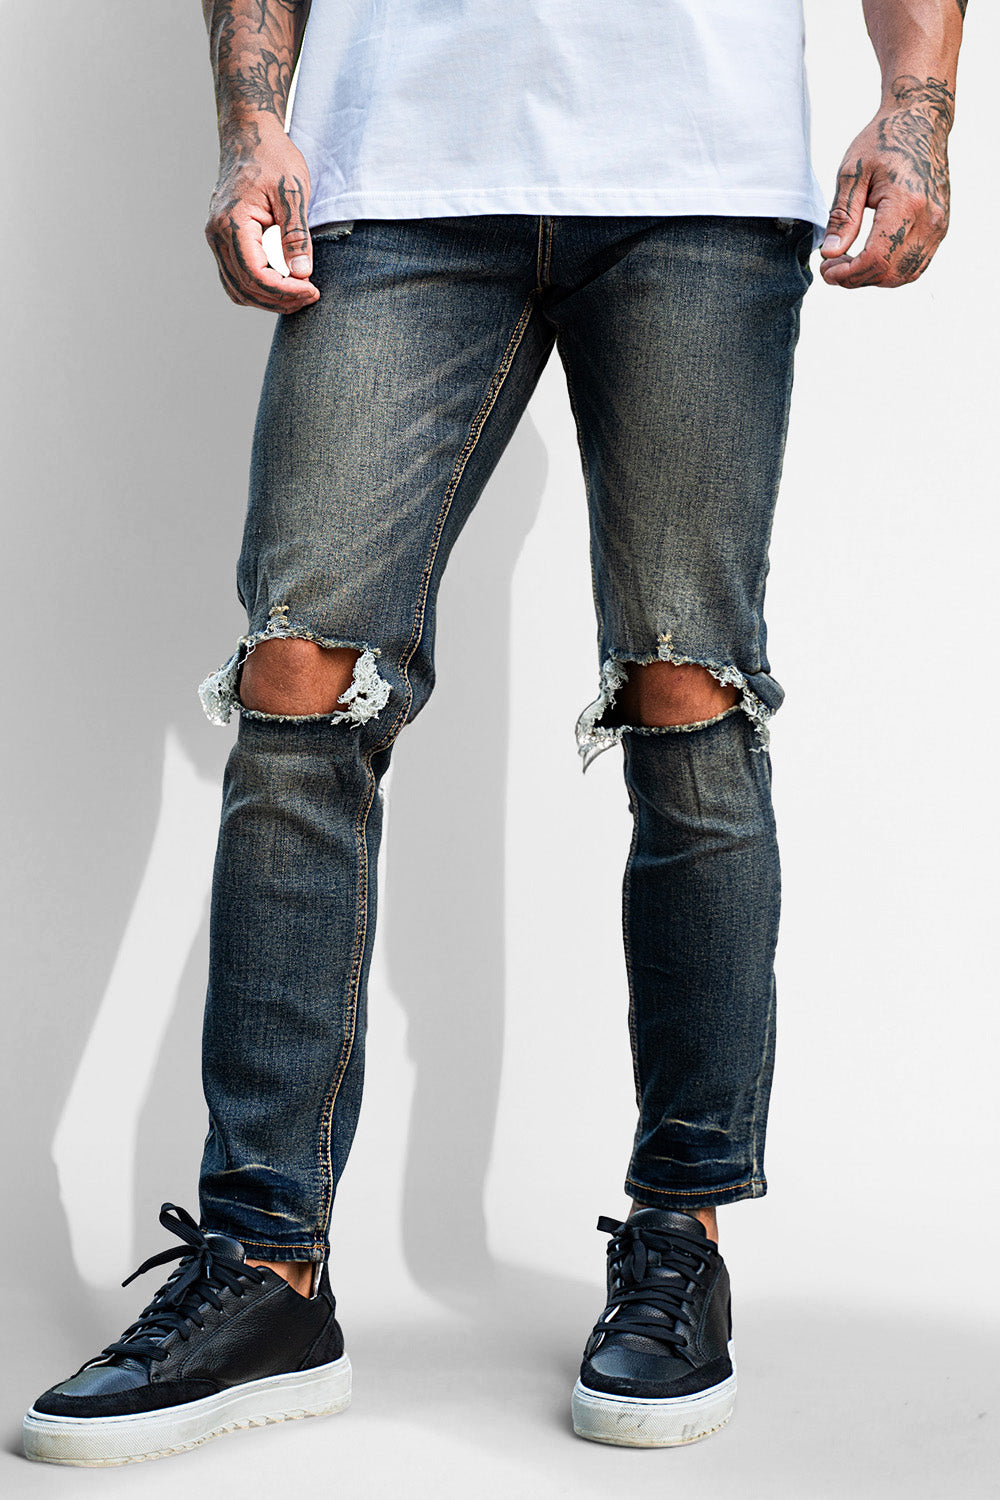 Gingtto Men's Vintage Slim Fit Jeans